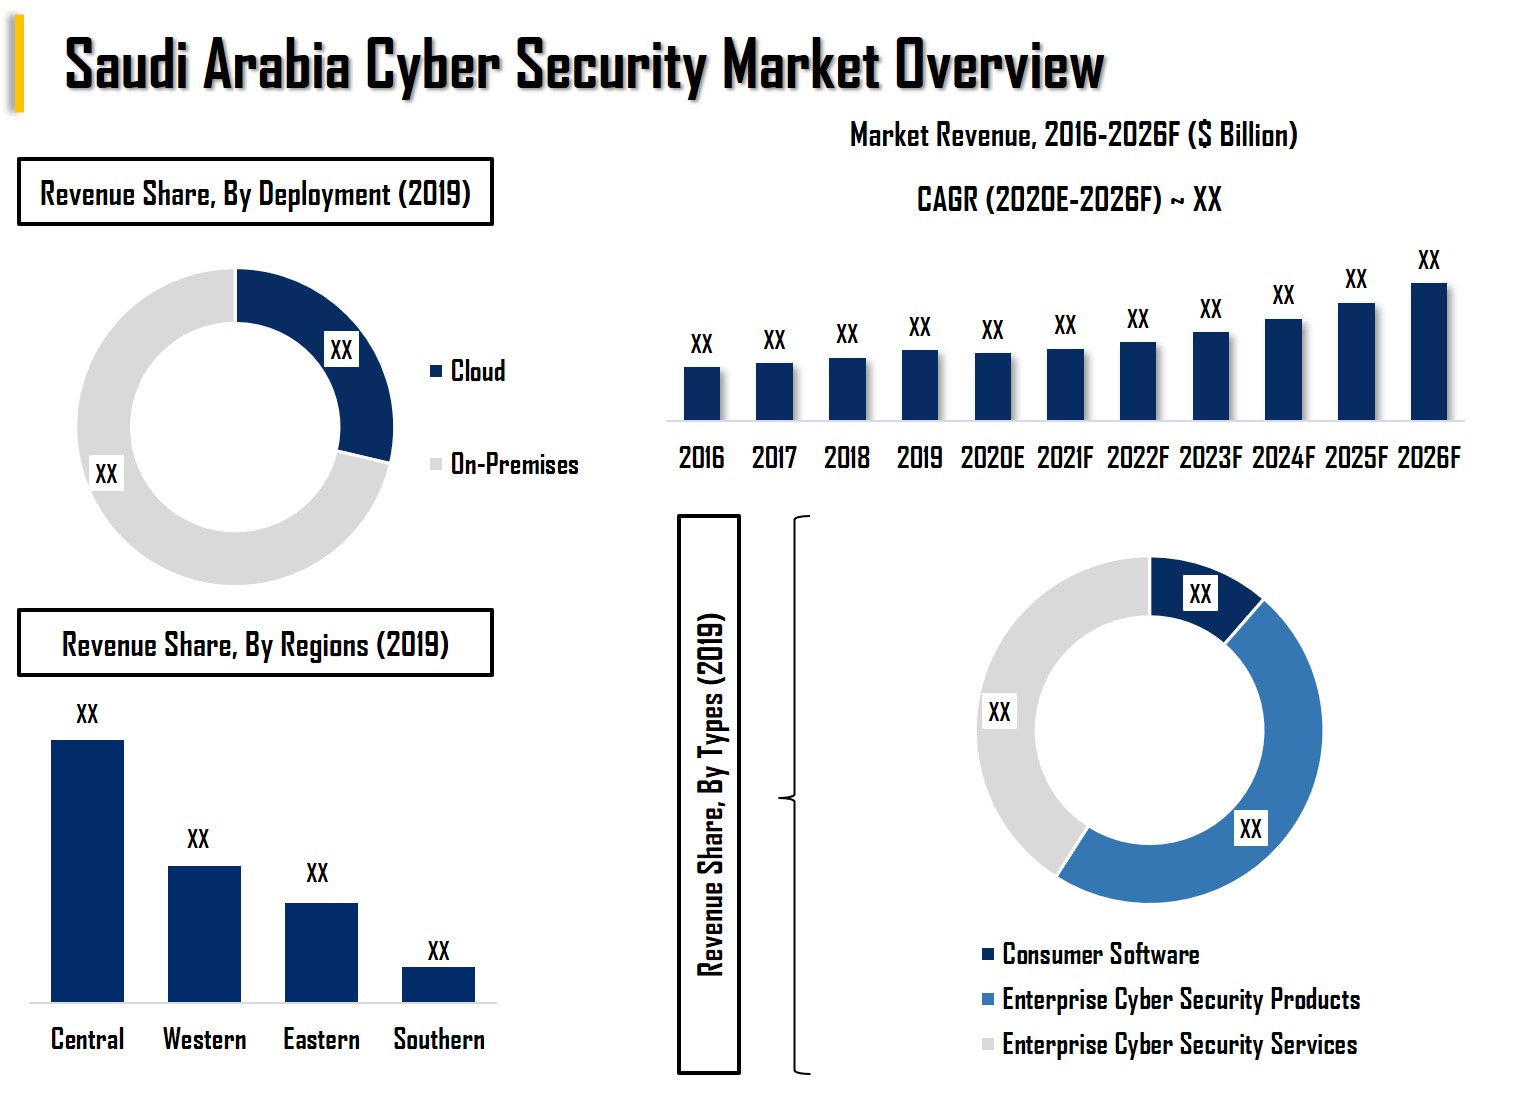 Saudi Arabia Cyber Security Market (2020-2026) Overview